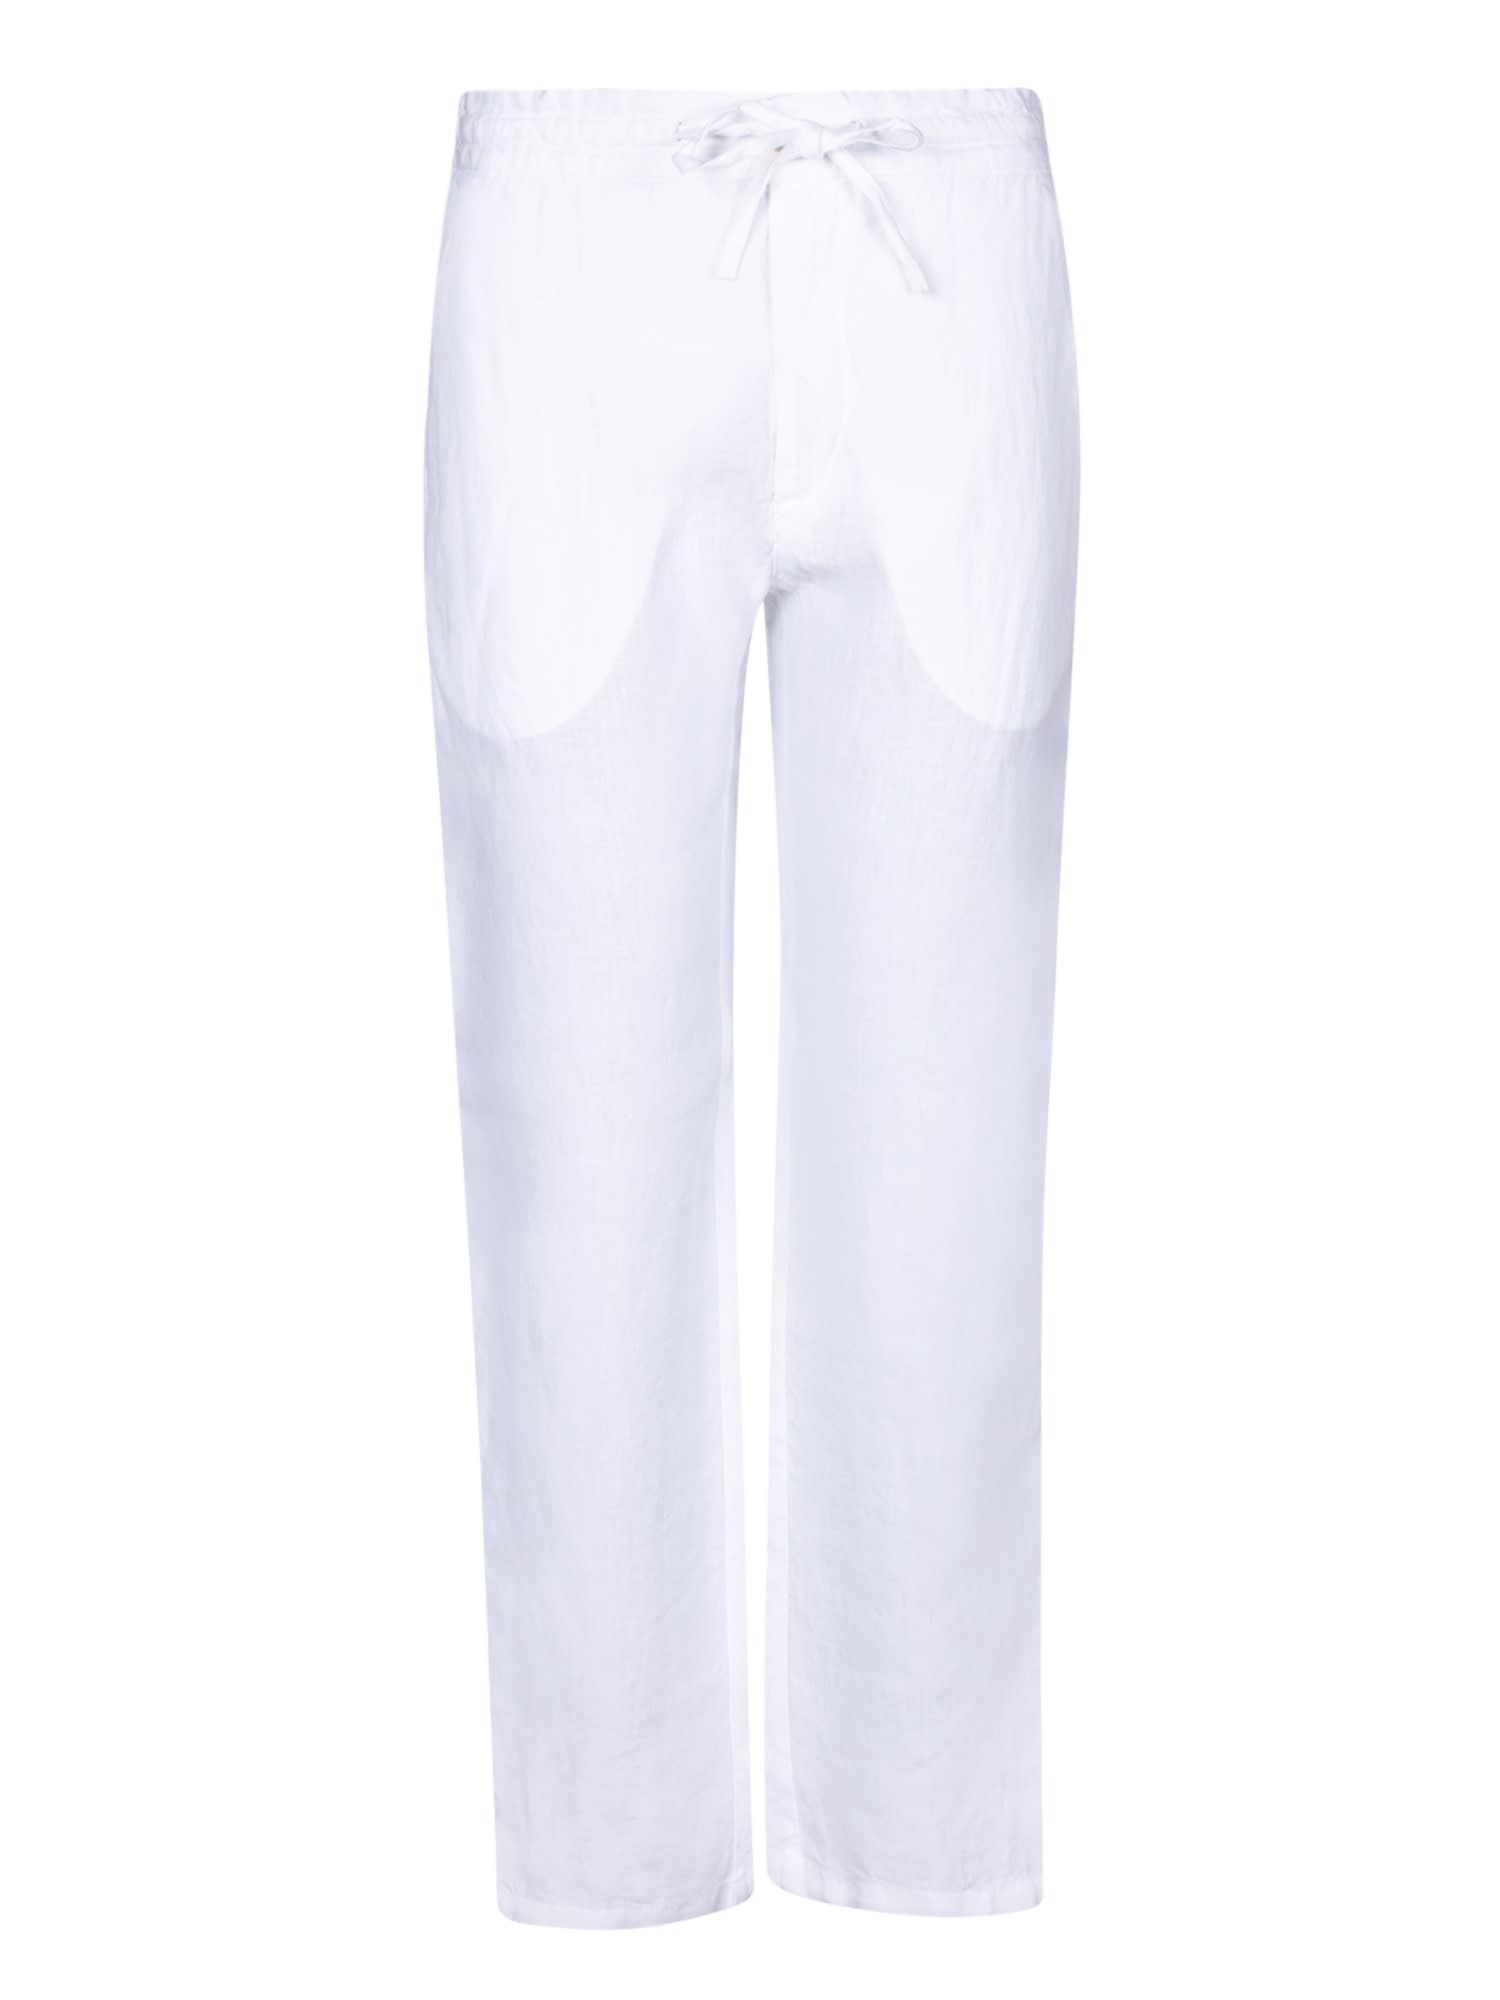 White Linen Drawstring Trousers